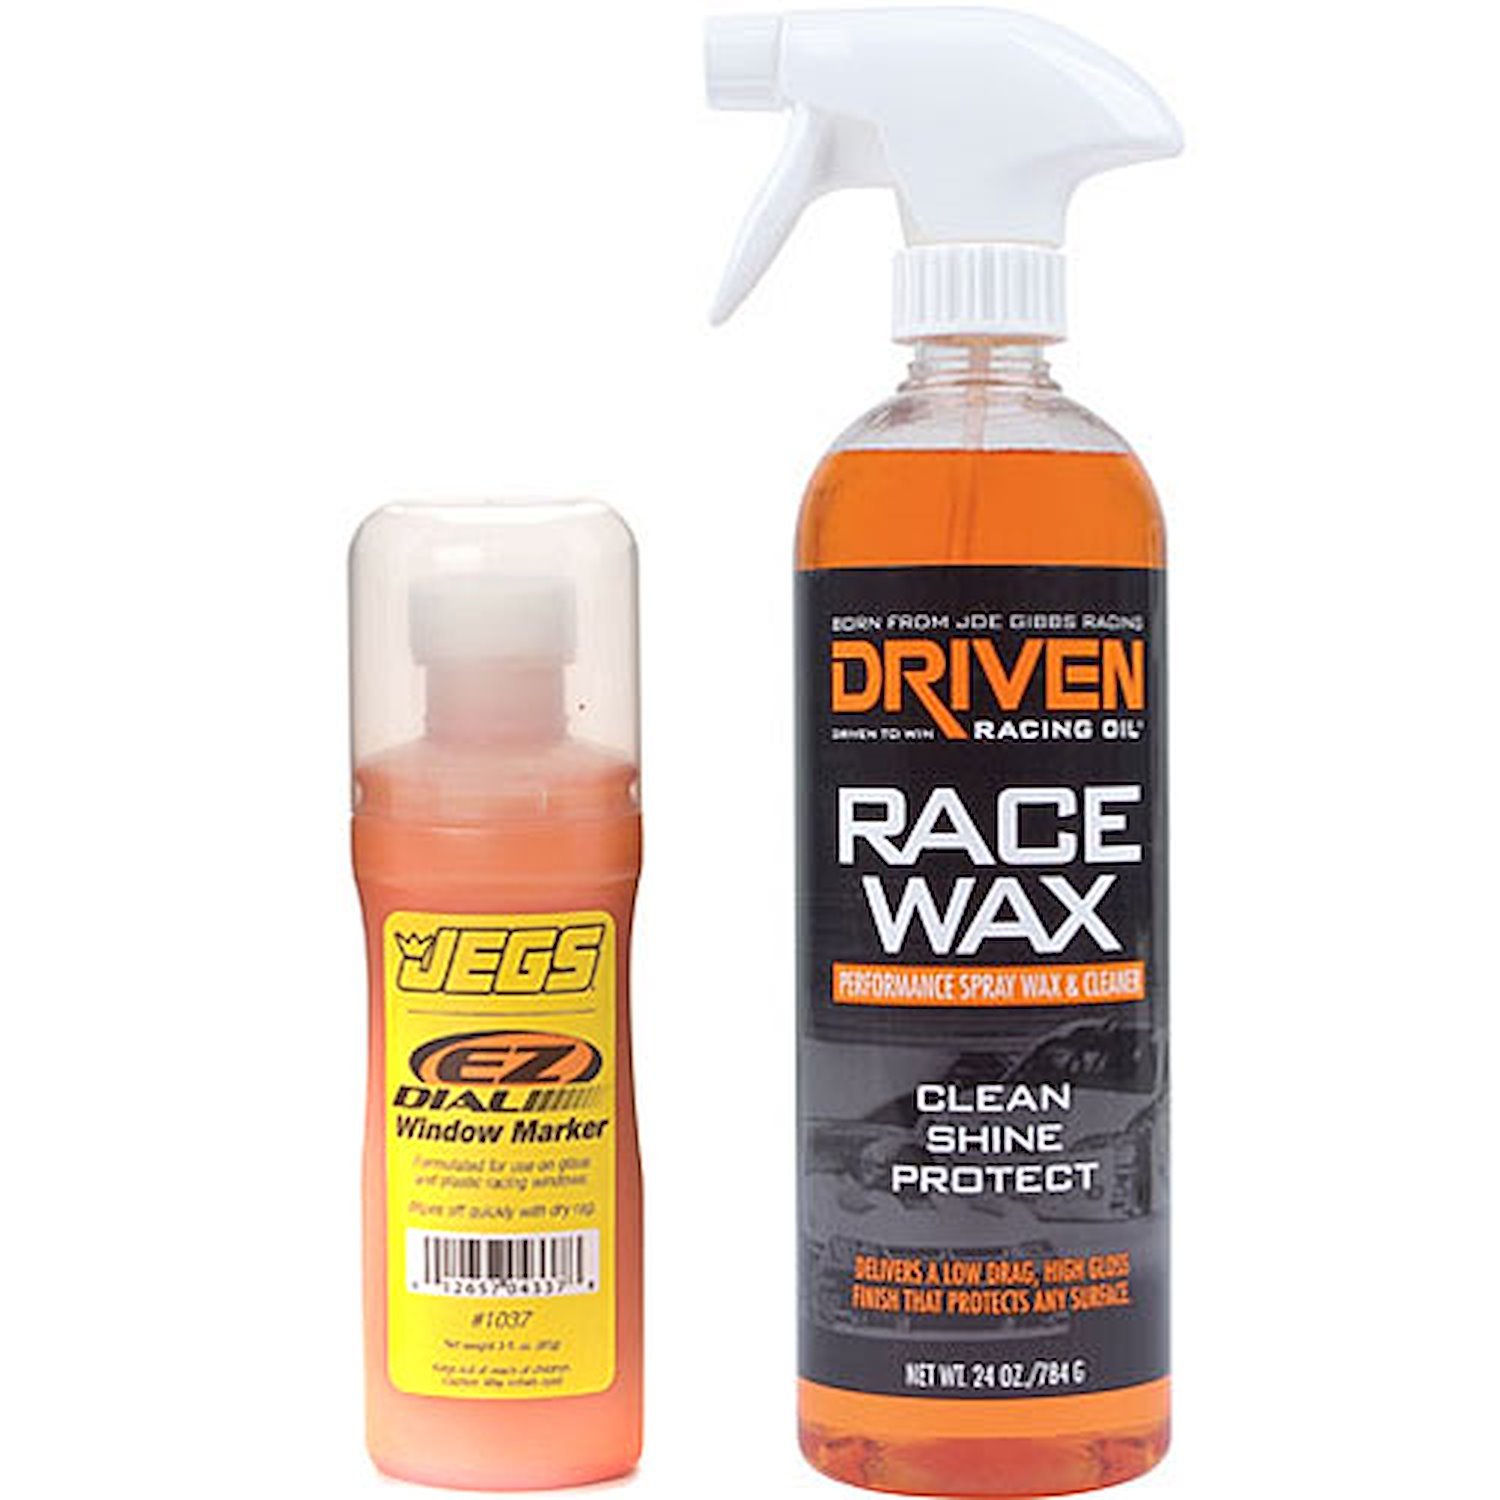 EZ Dial and Race Wax Kit [Orange]